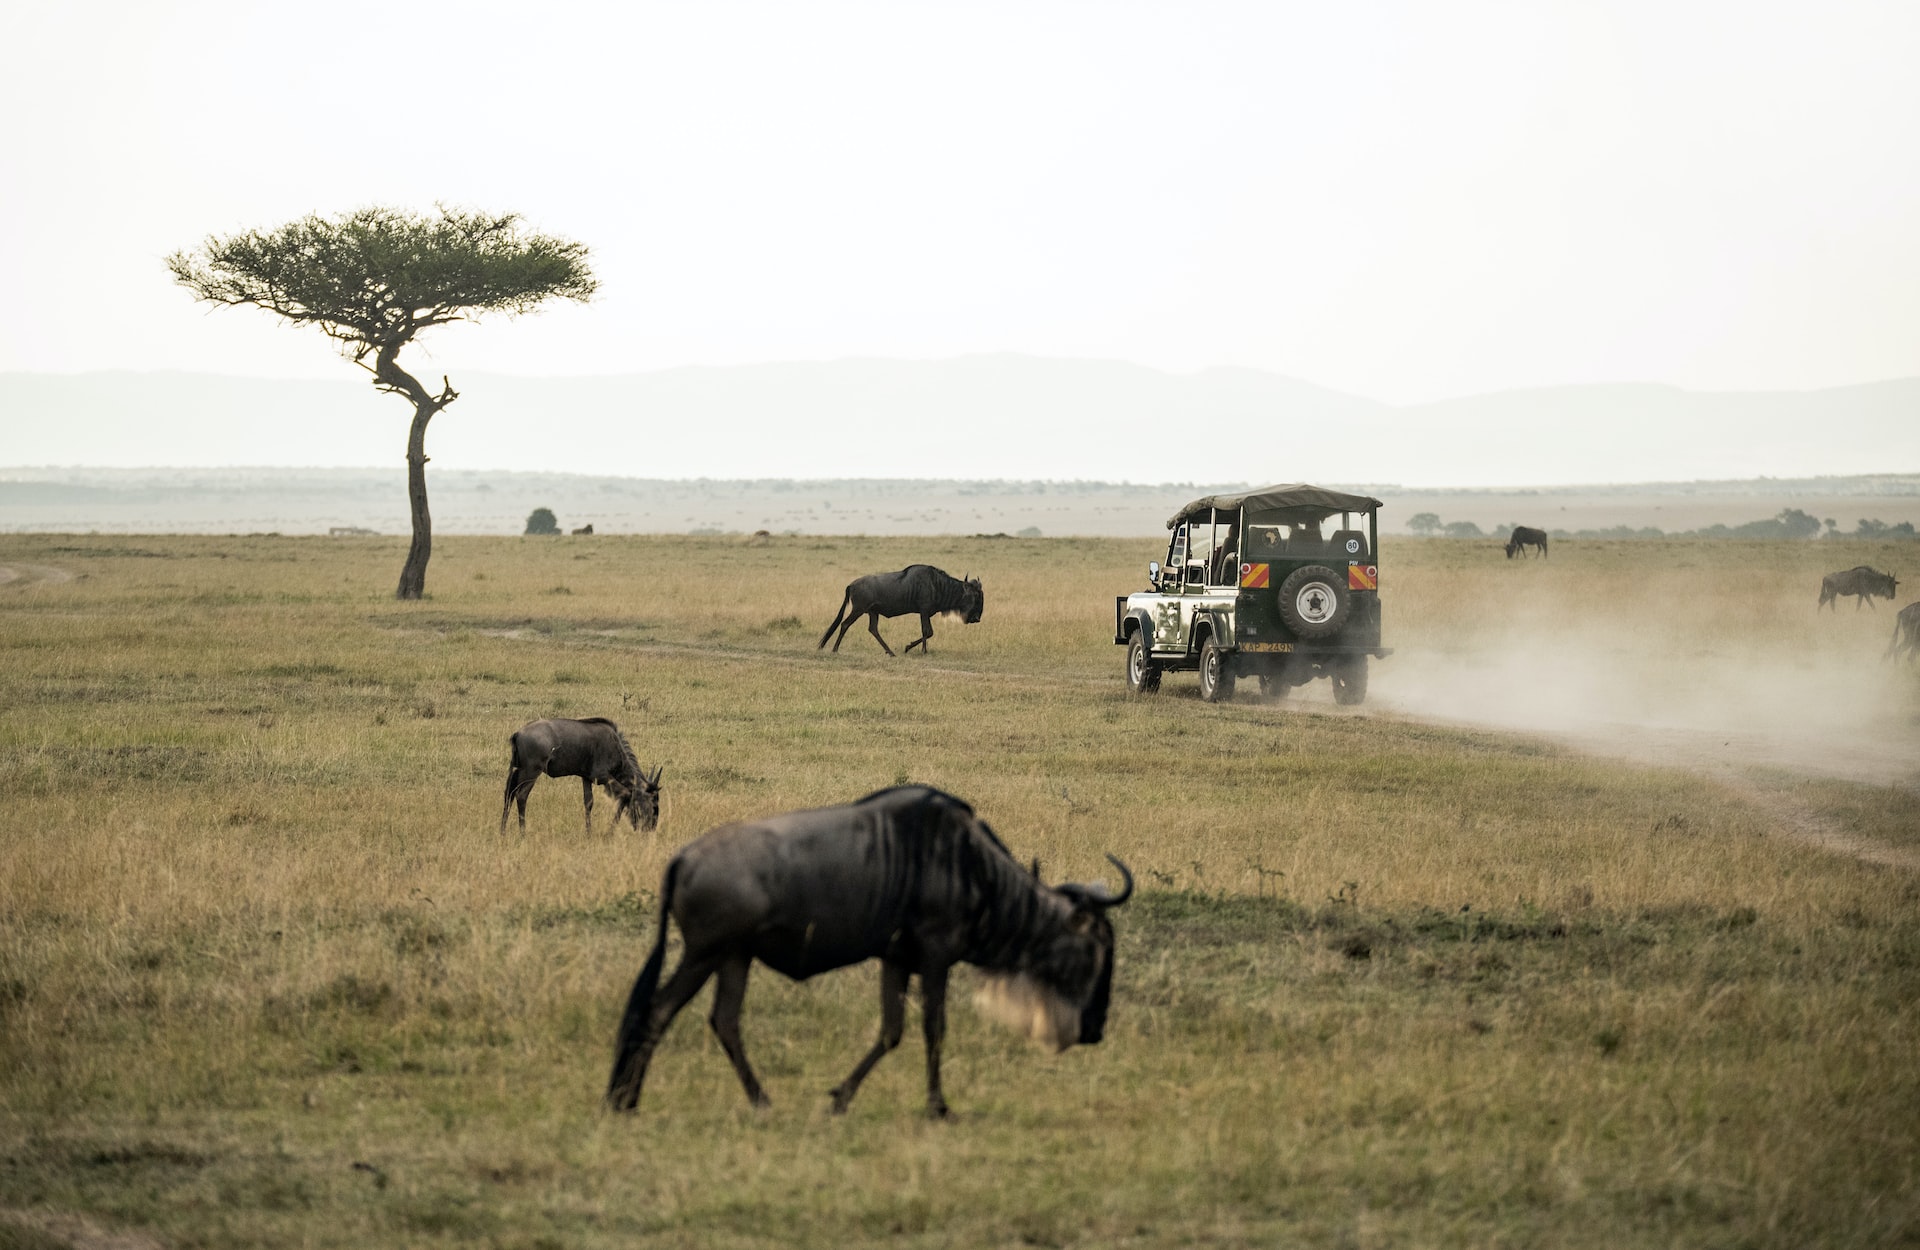 Masai Mara, a breathtaking nature travel destination
